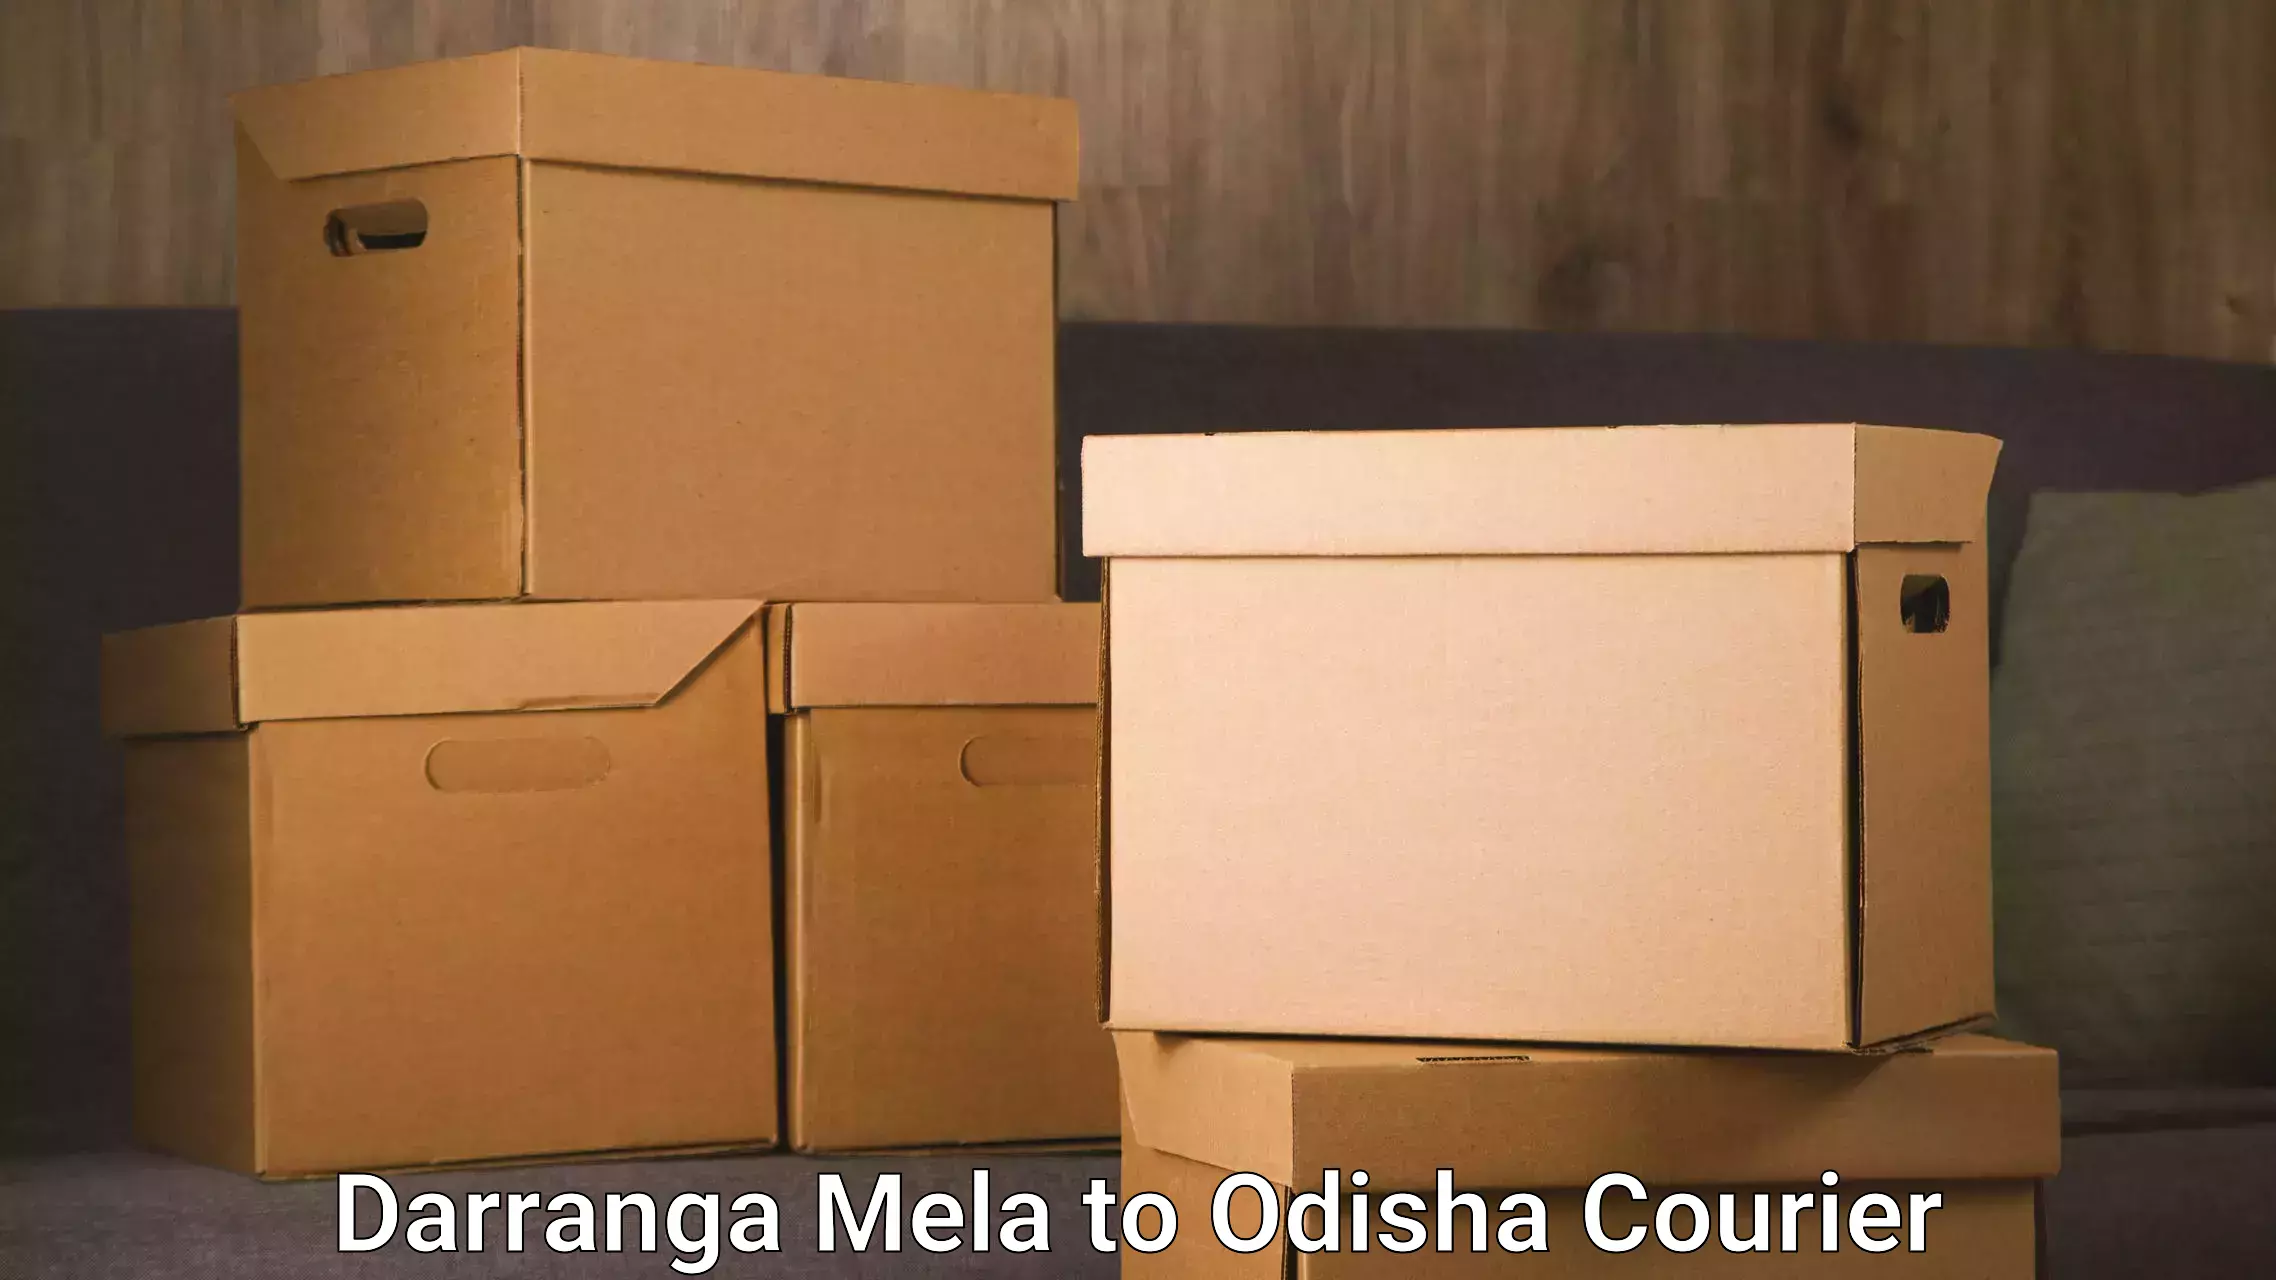 Efficient parcel service Darranga Mela to Odisha